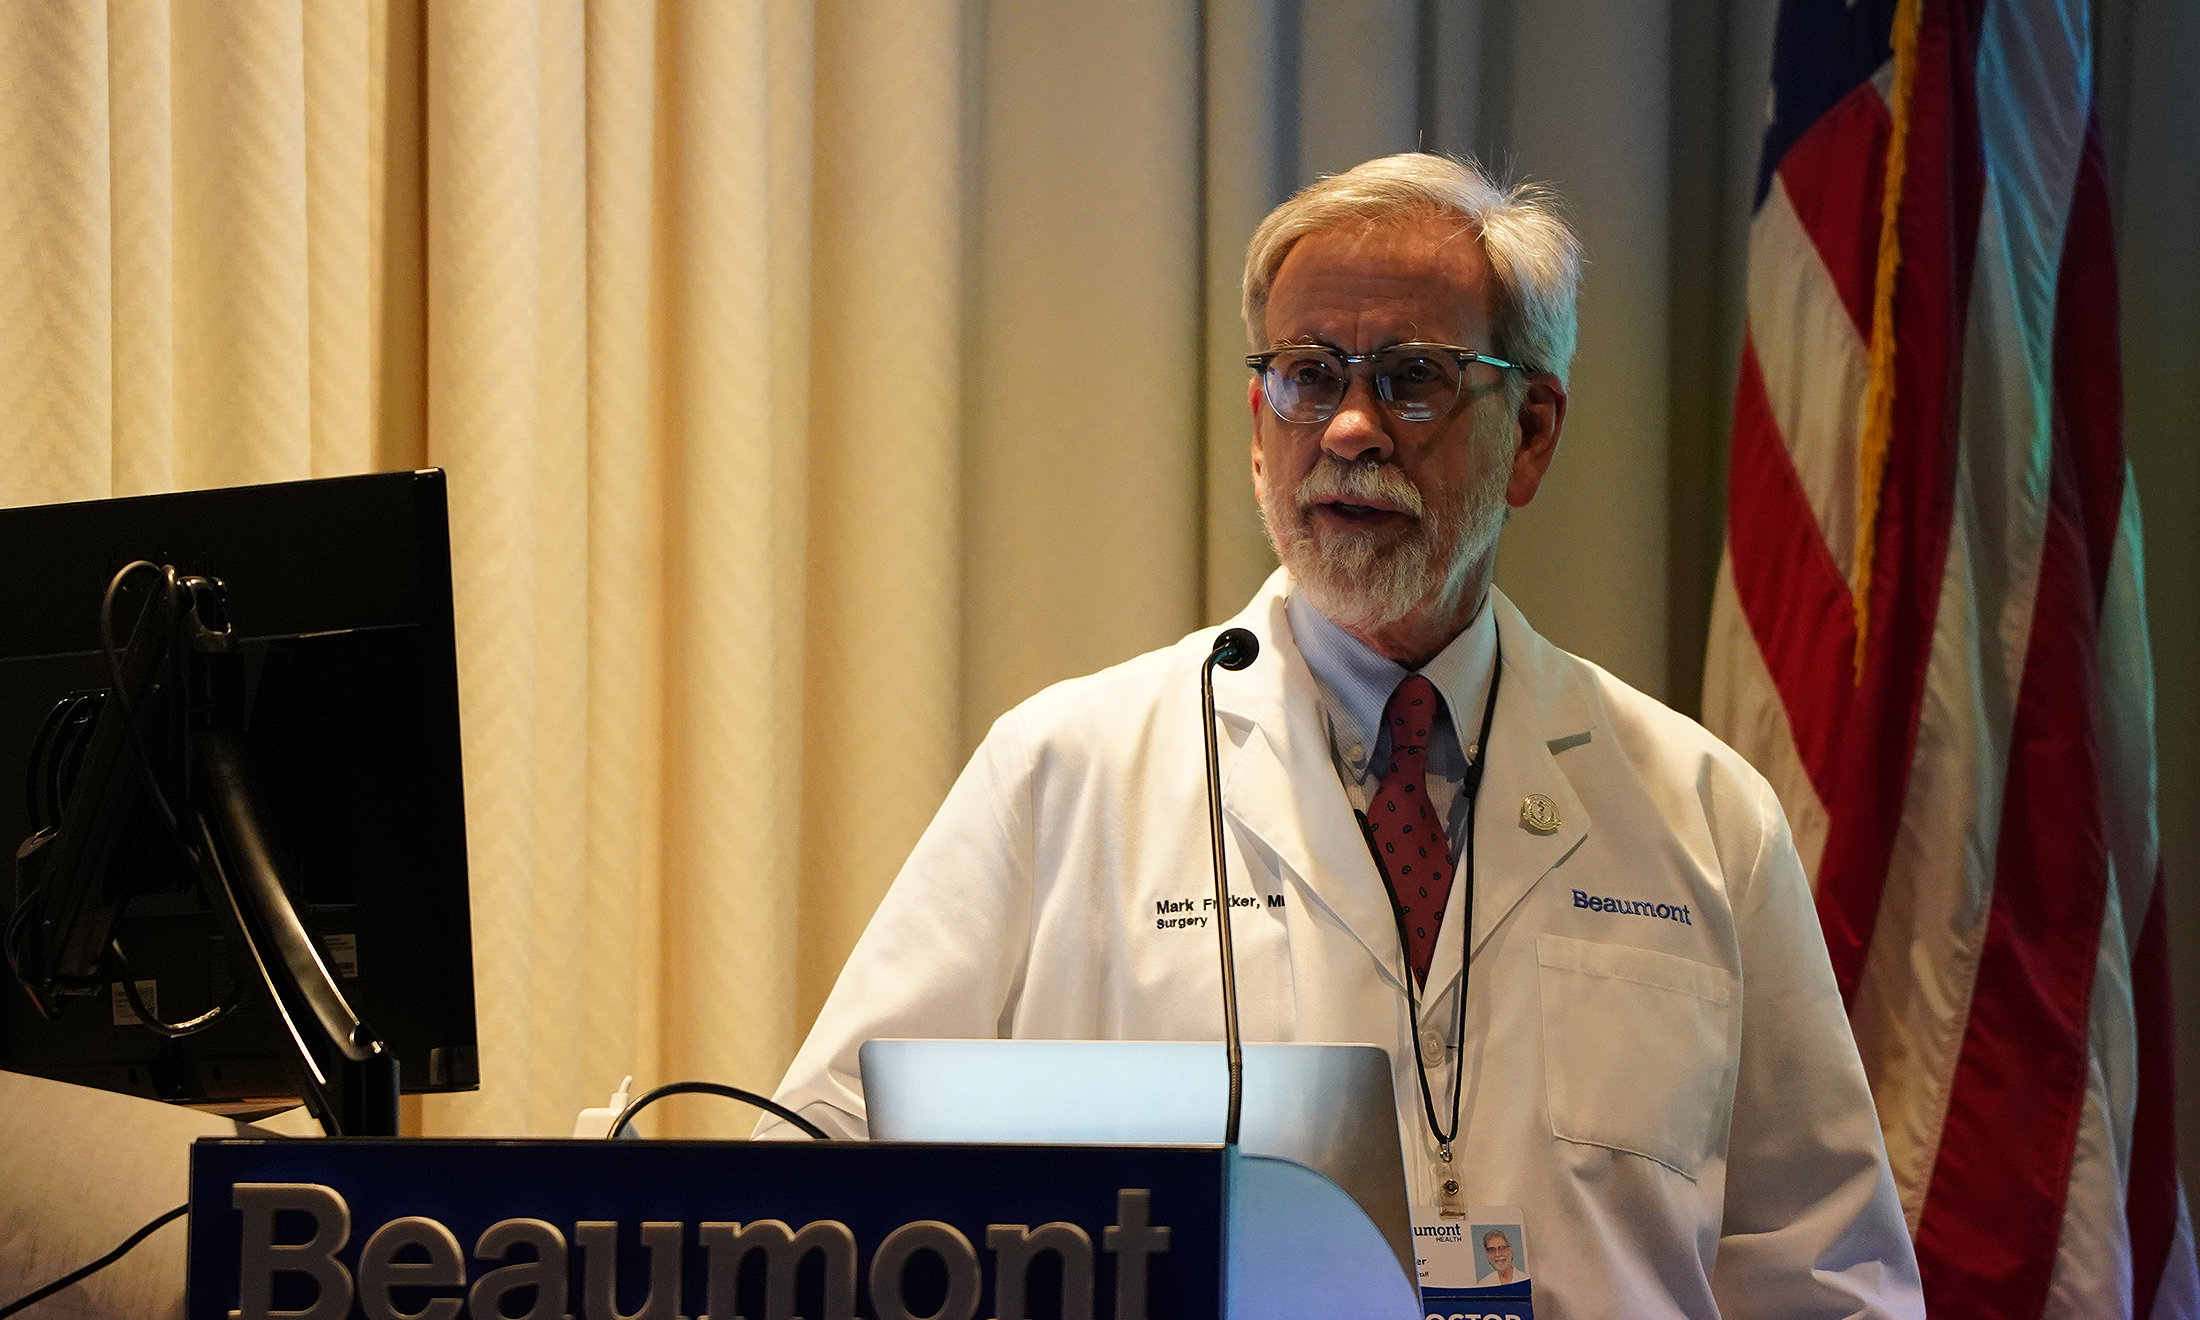 An image of Dr. Mark Frikker giving opening remarks